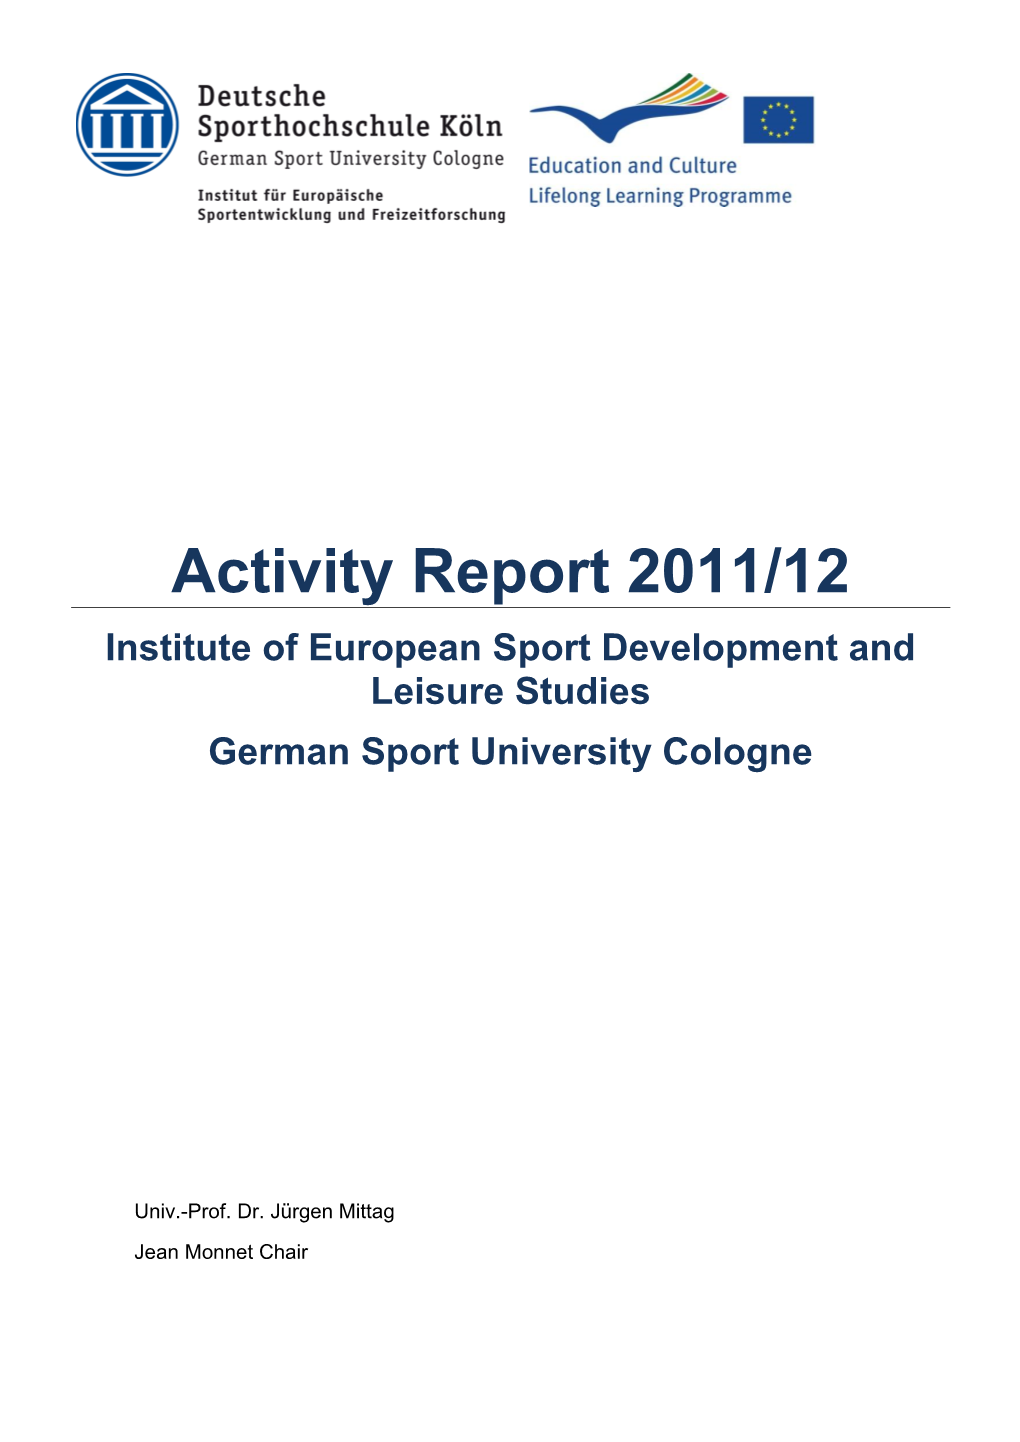 Activity Report 2011/12 Institute of European Sport Development and Leisure Studies German Sport University Cologne